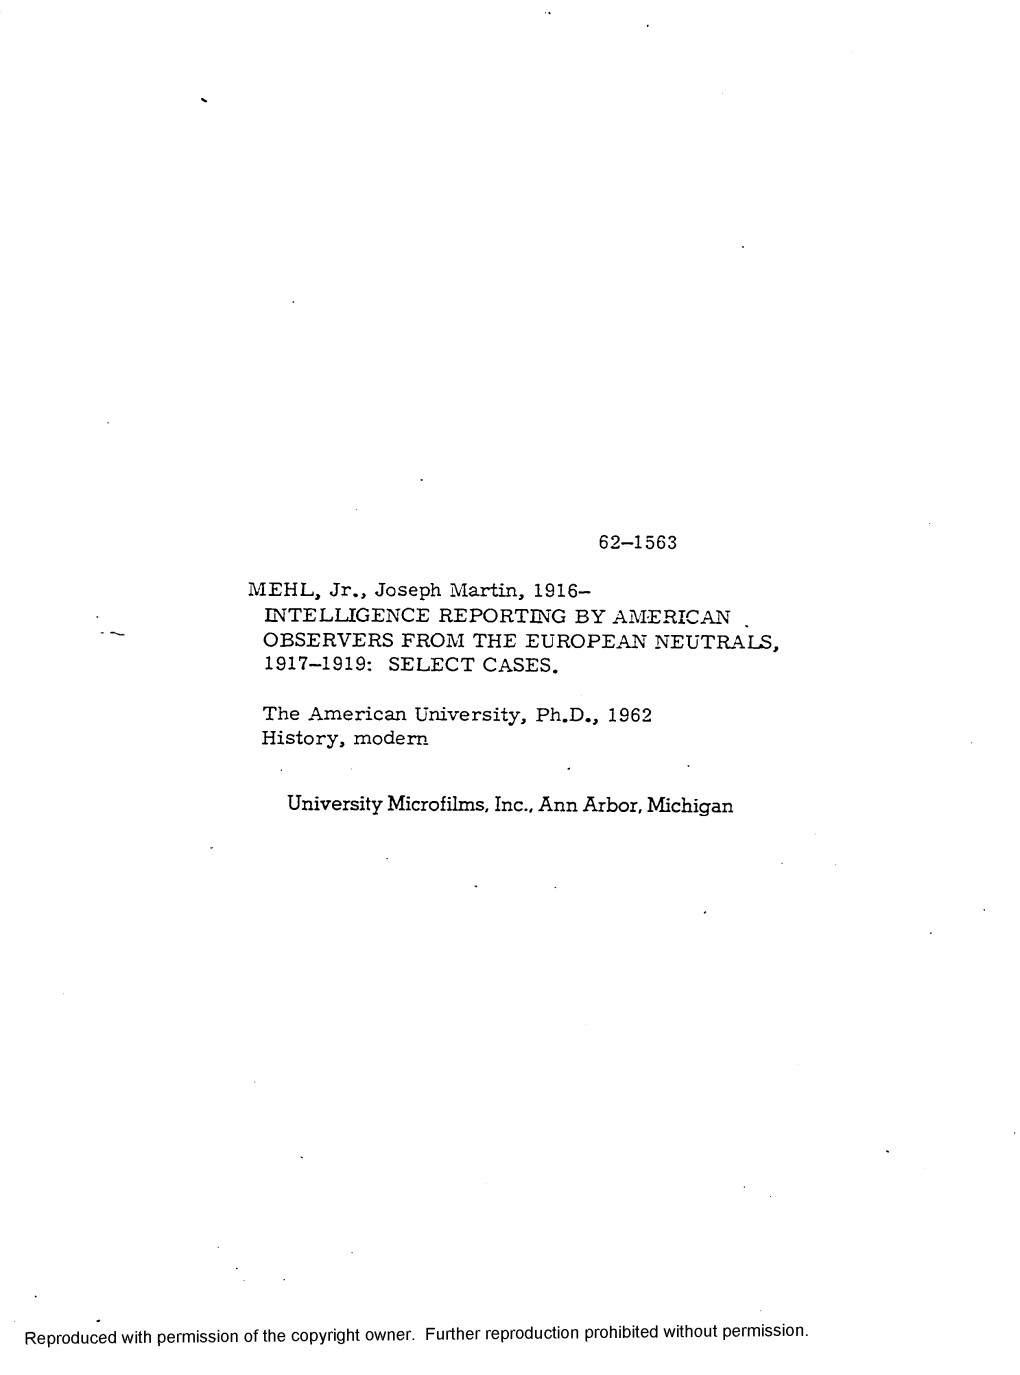 University Microfilms, Inc.,Ann Arbor, Michigan